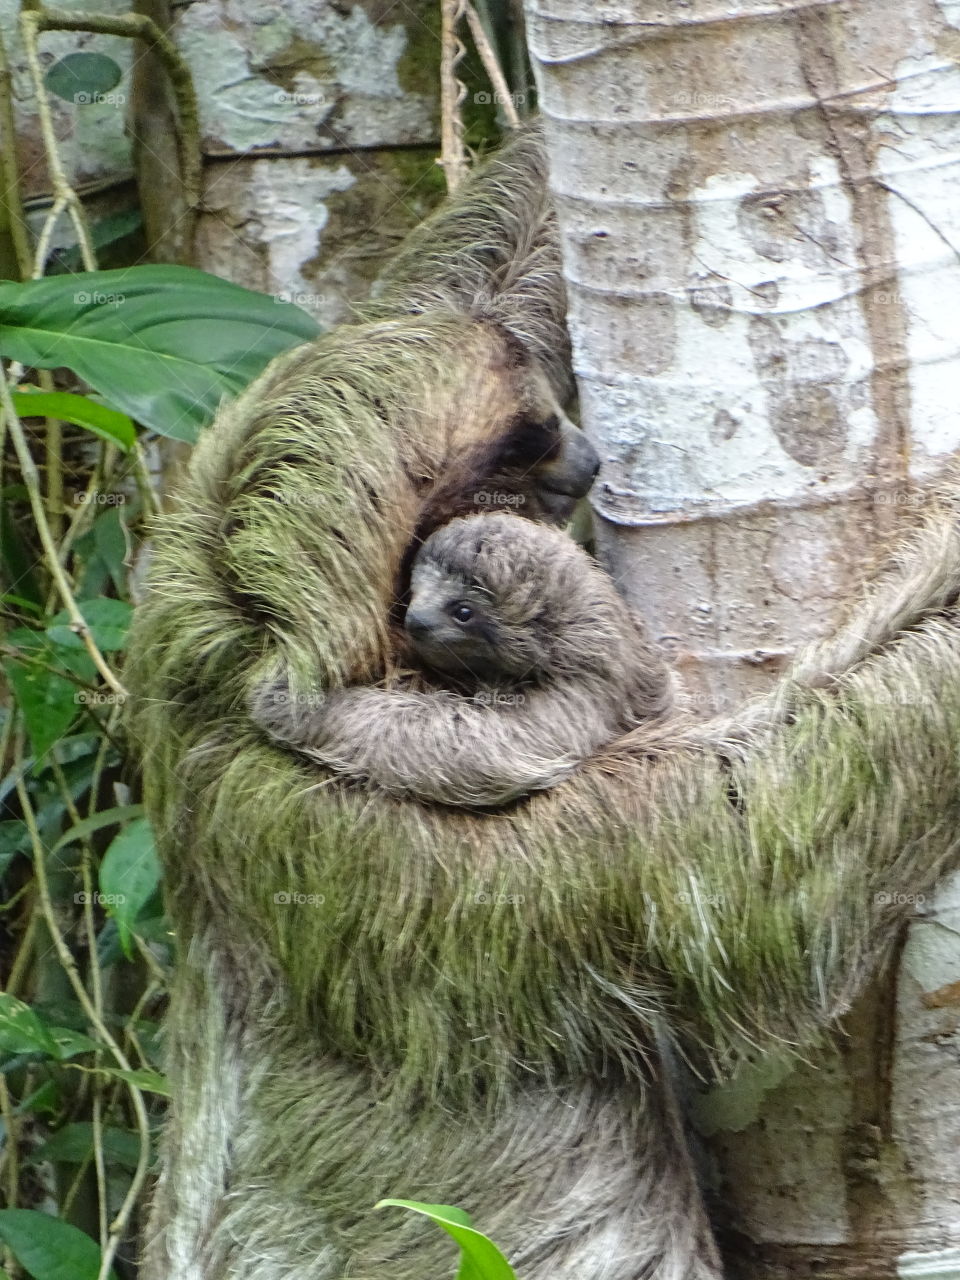 hugging mom. baby sloth hugging mom